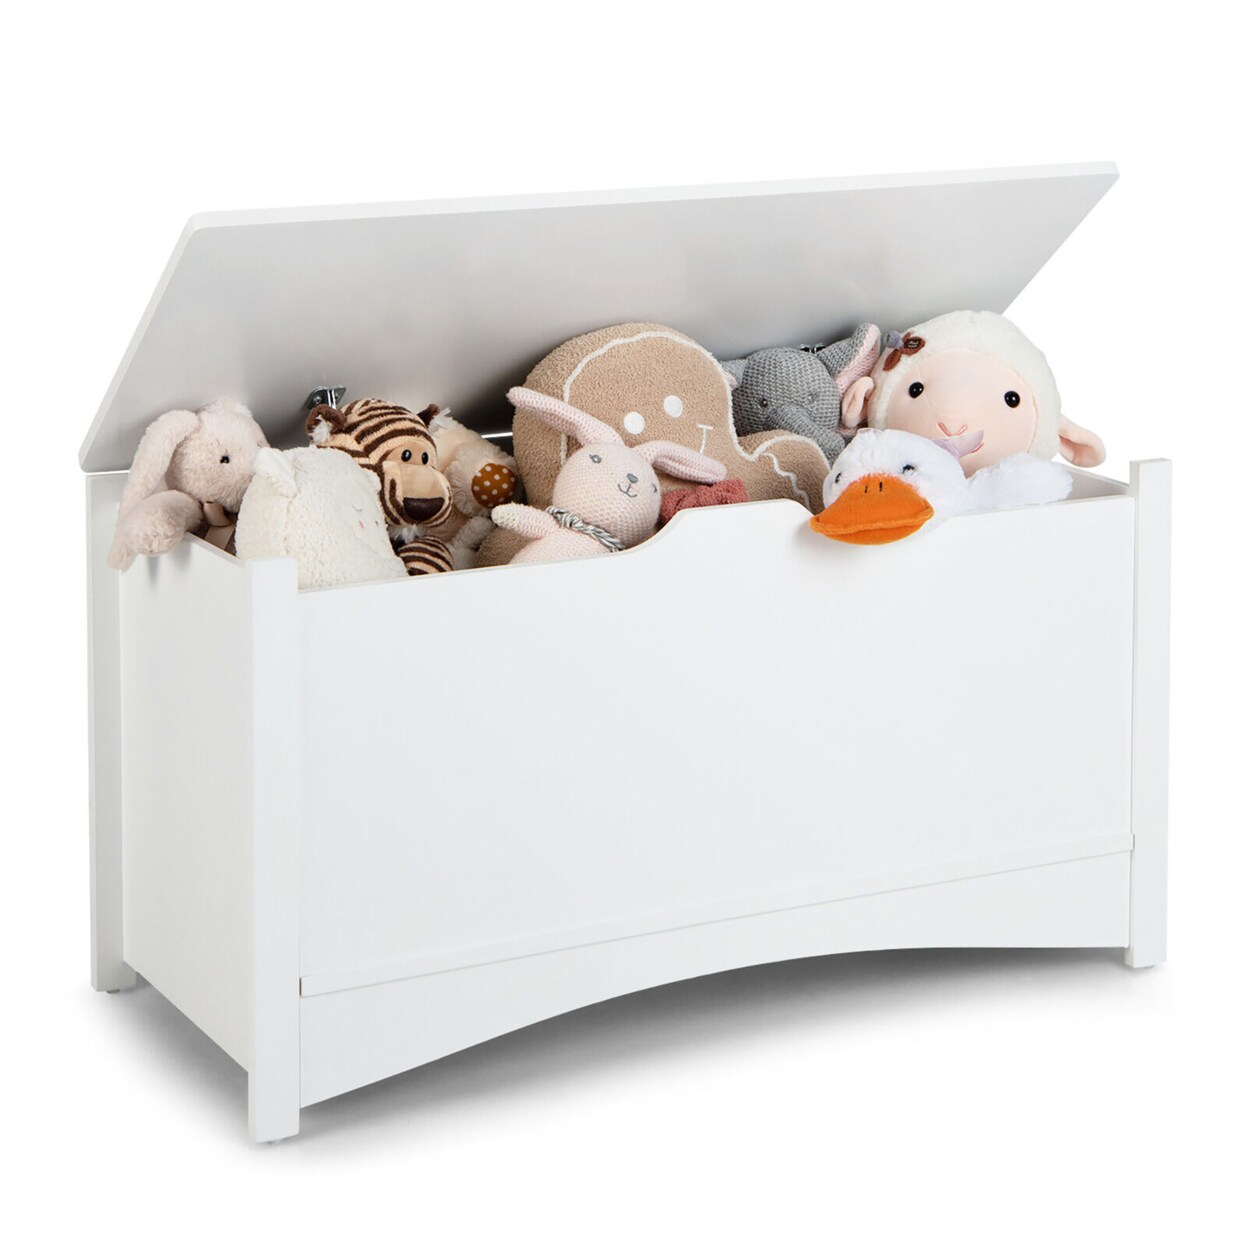 Gymax Kids Toy Box Large Wooden Flip-Top Storage Chest Organizer Bench w/ Safety Hinge